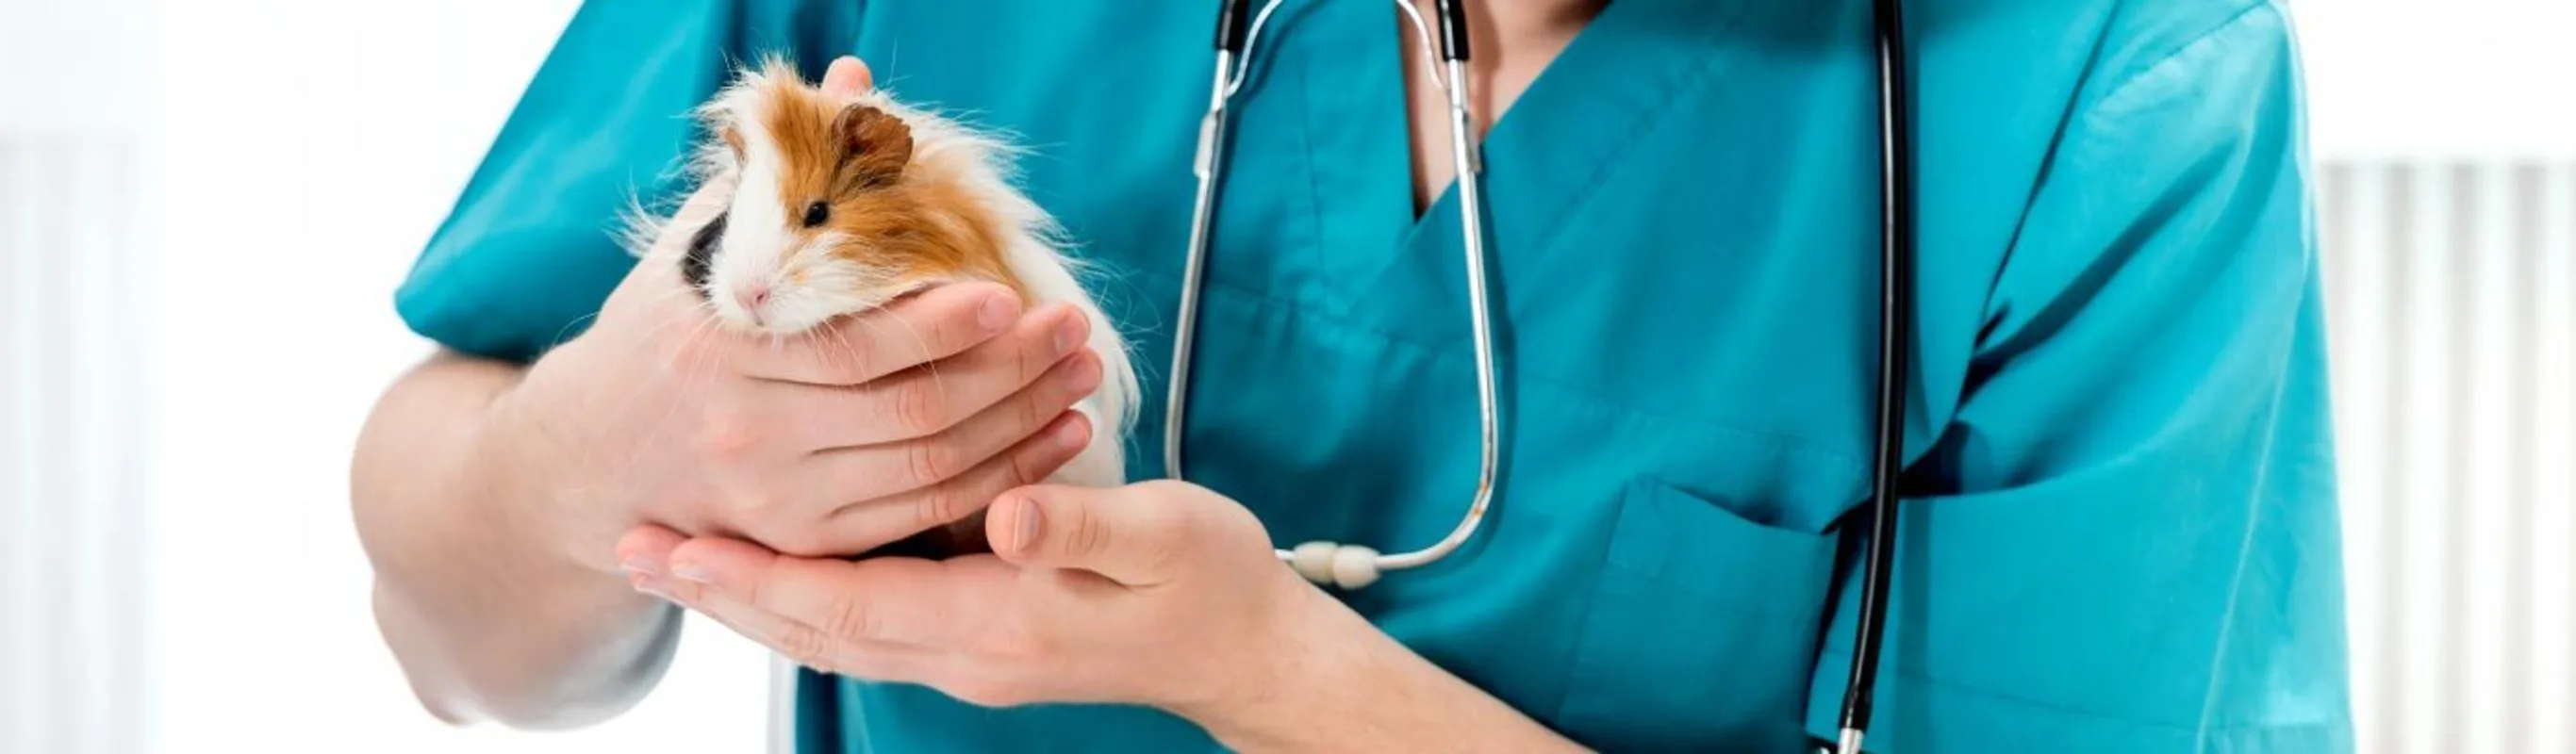 Hamster being held by veterinary staff